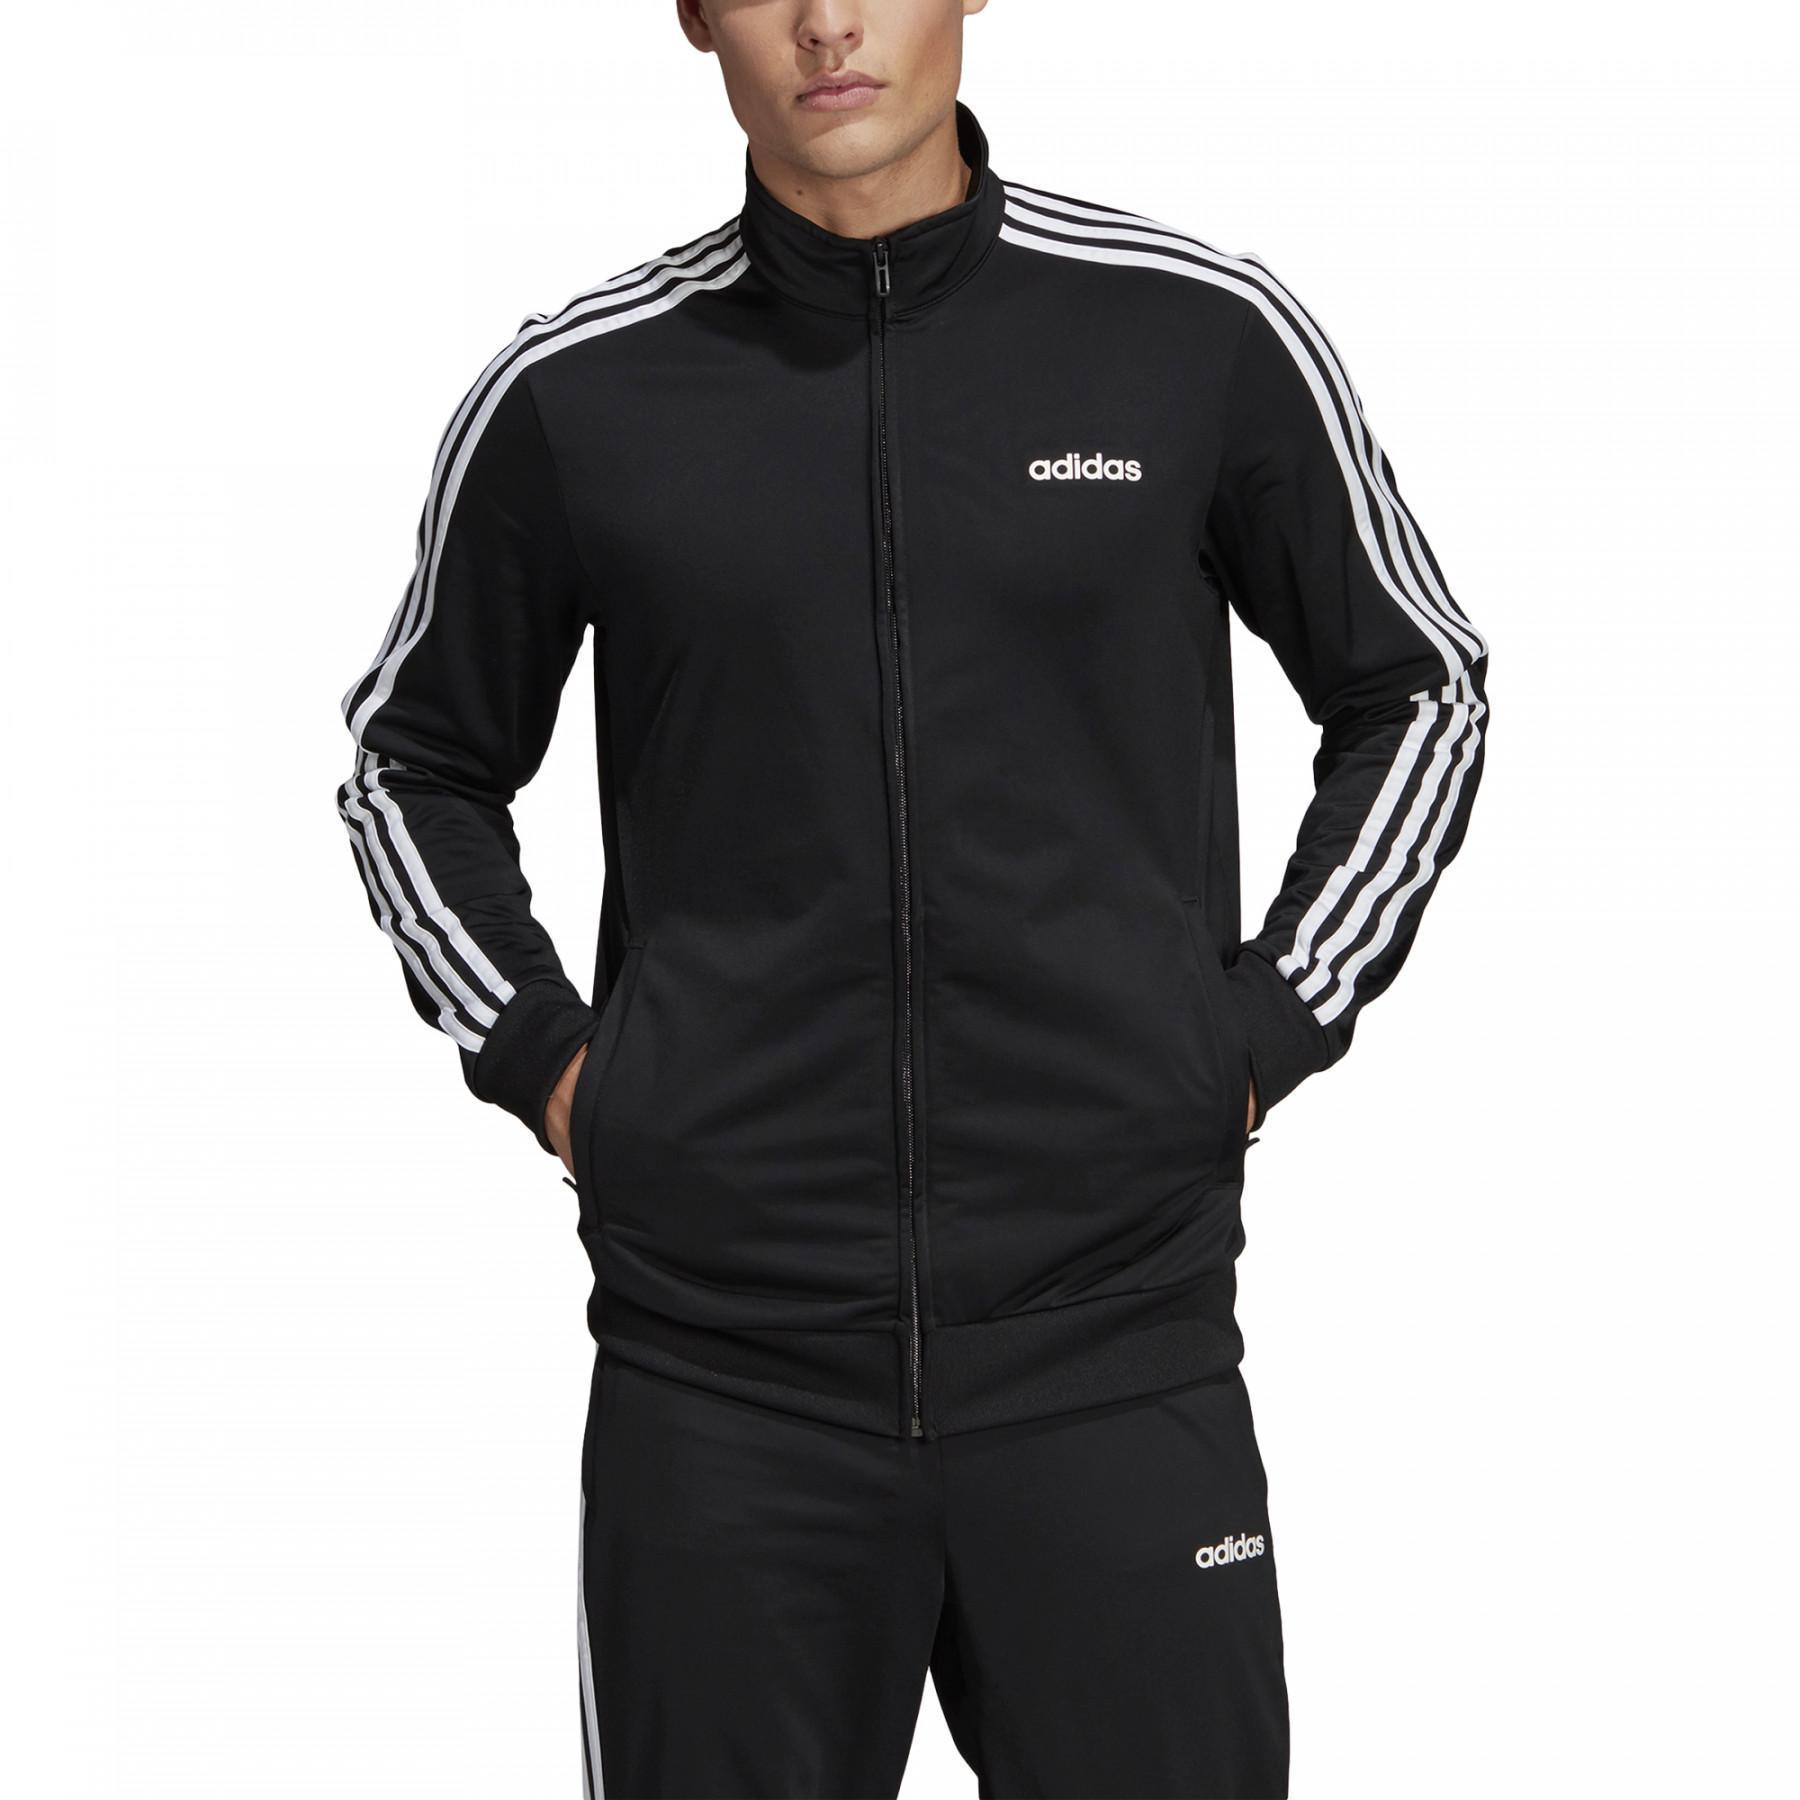 Sweat jacket adidas Essentials 3-Stripes Tricot - adidas - Brands -  Handball wear